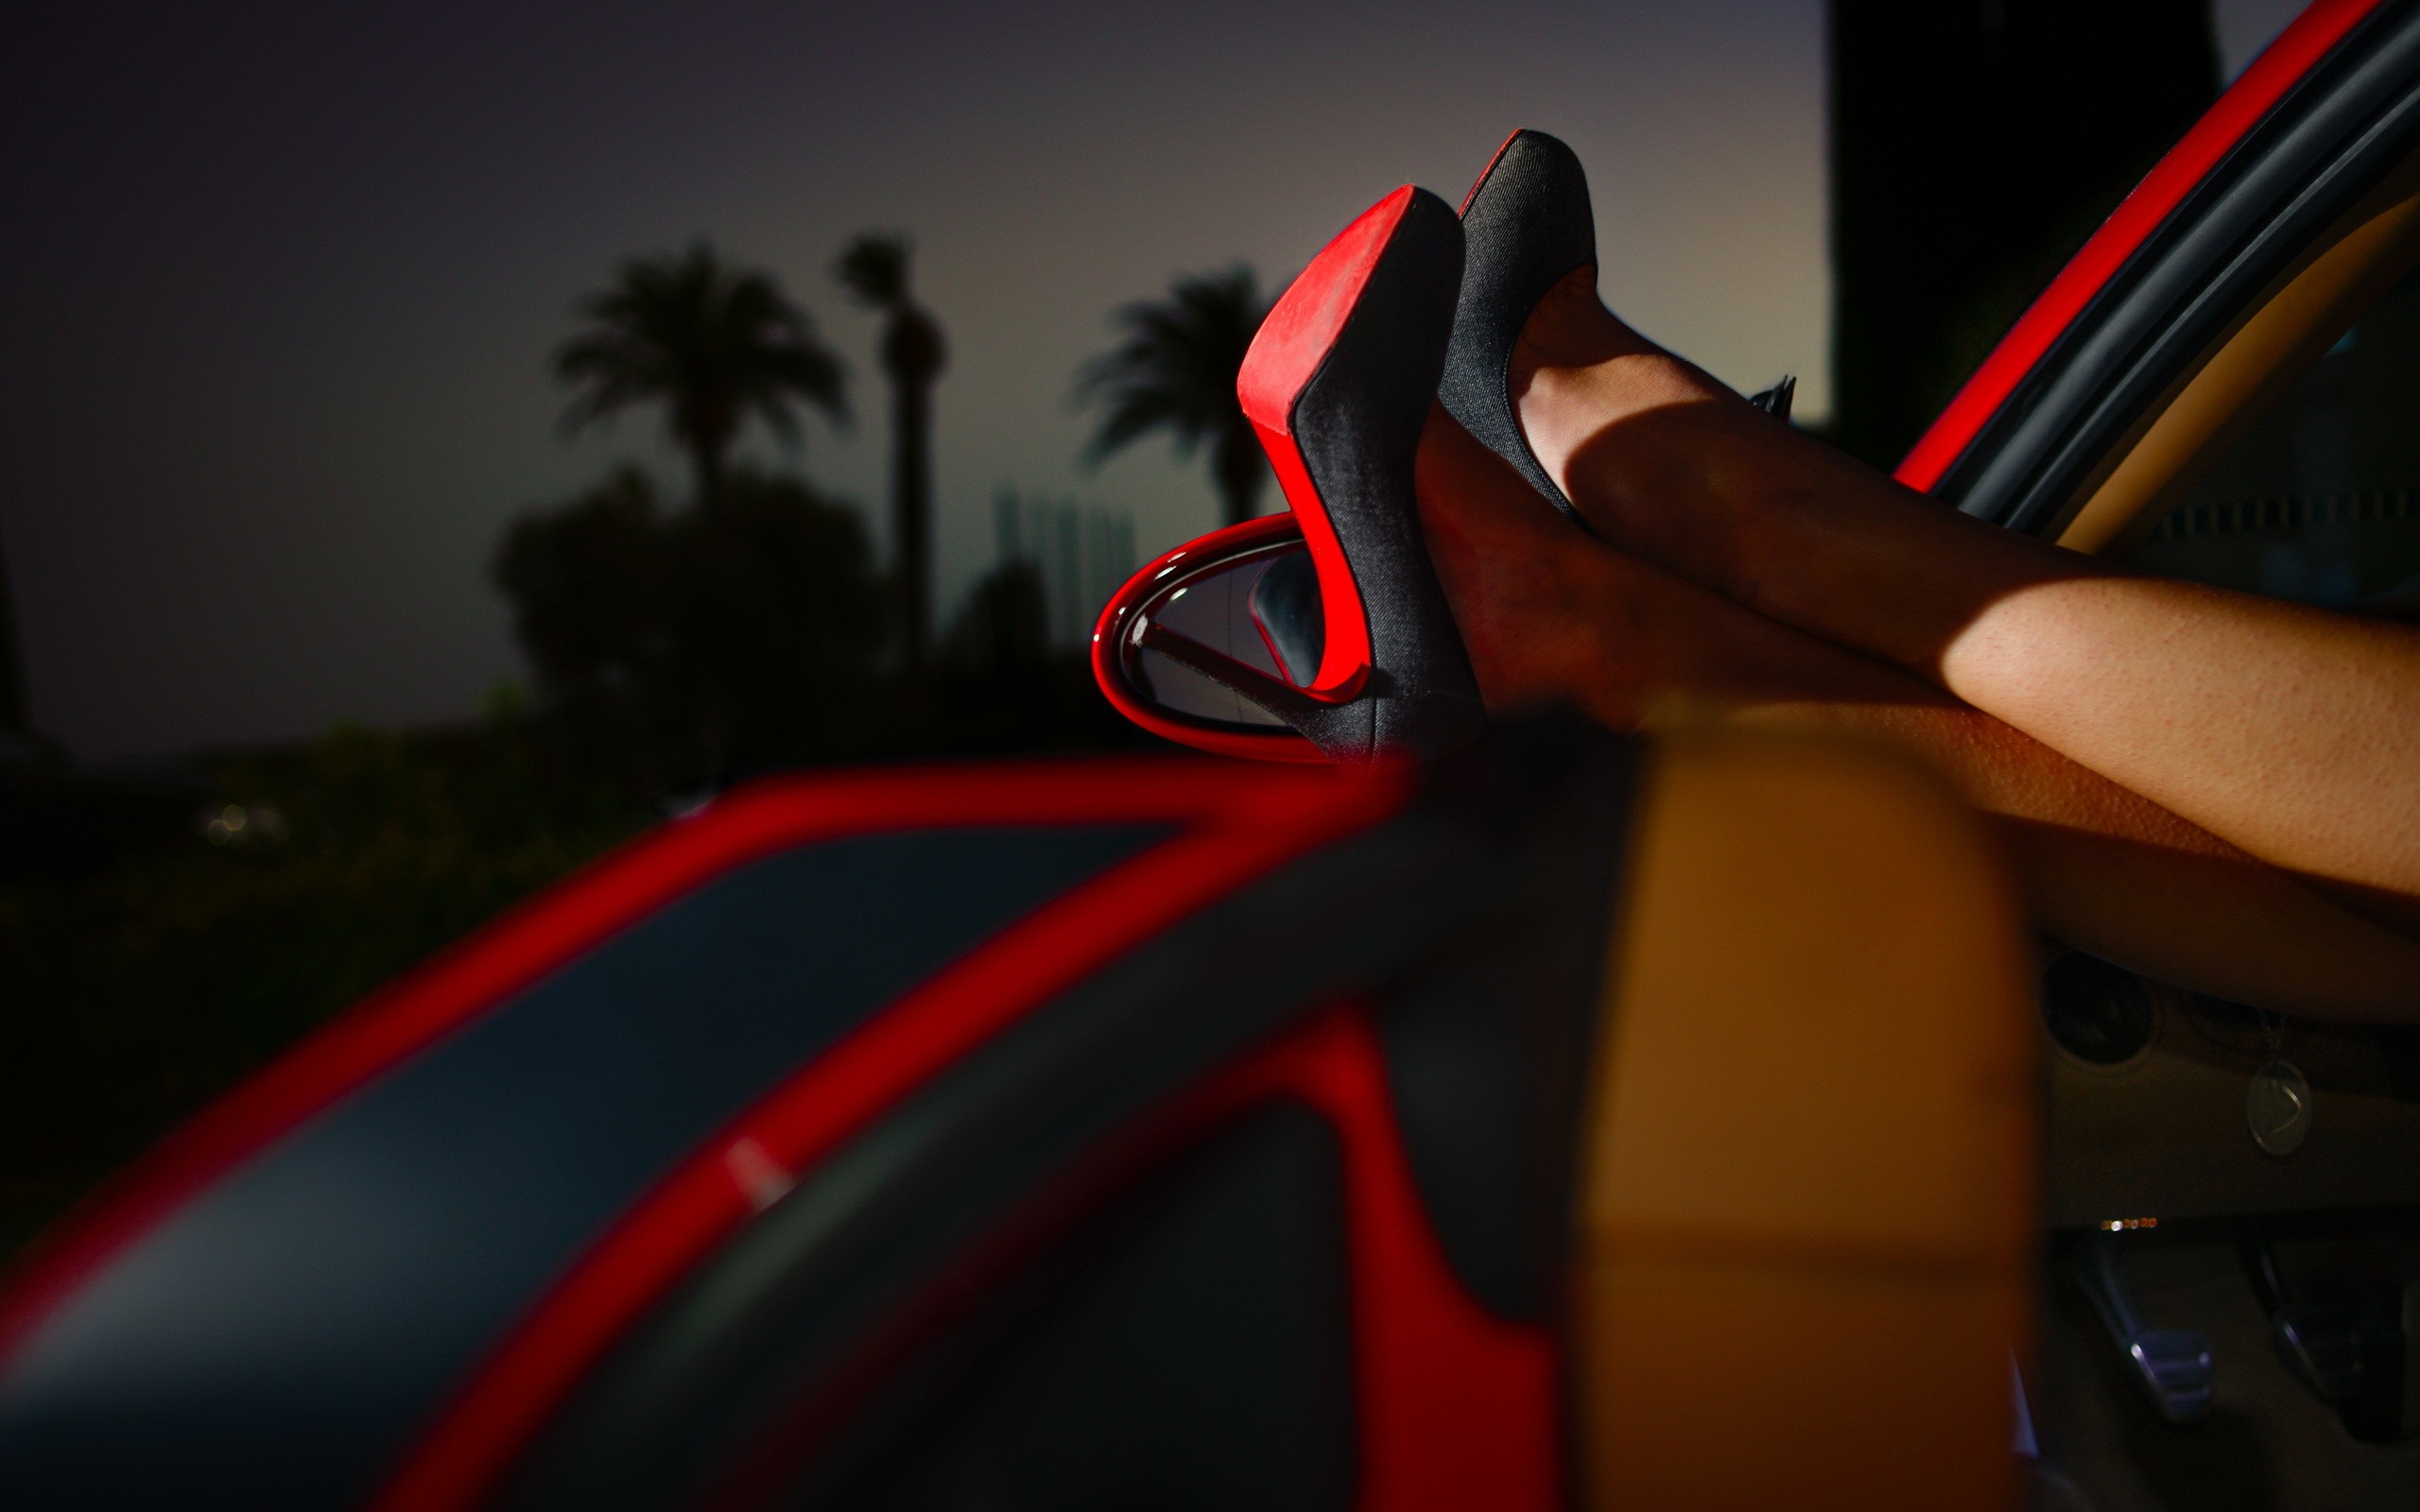 People 2560x1600 women model legs high heels stiletto car car interior black heels palm trees evening depth of field Louboutin heels women with cars vehicle red cars